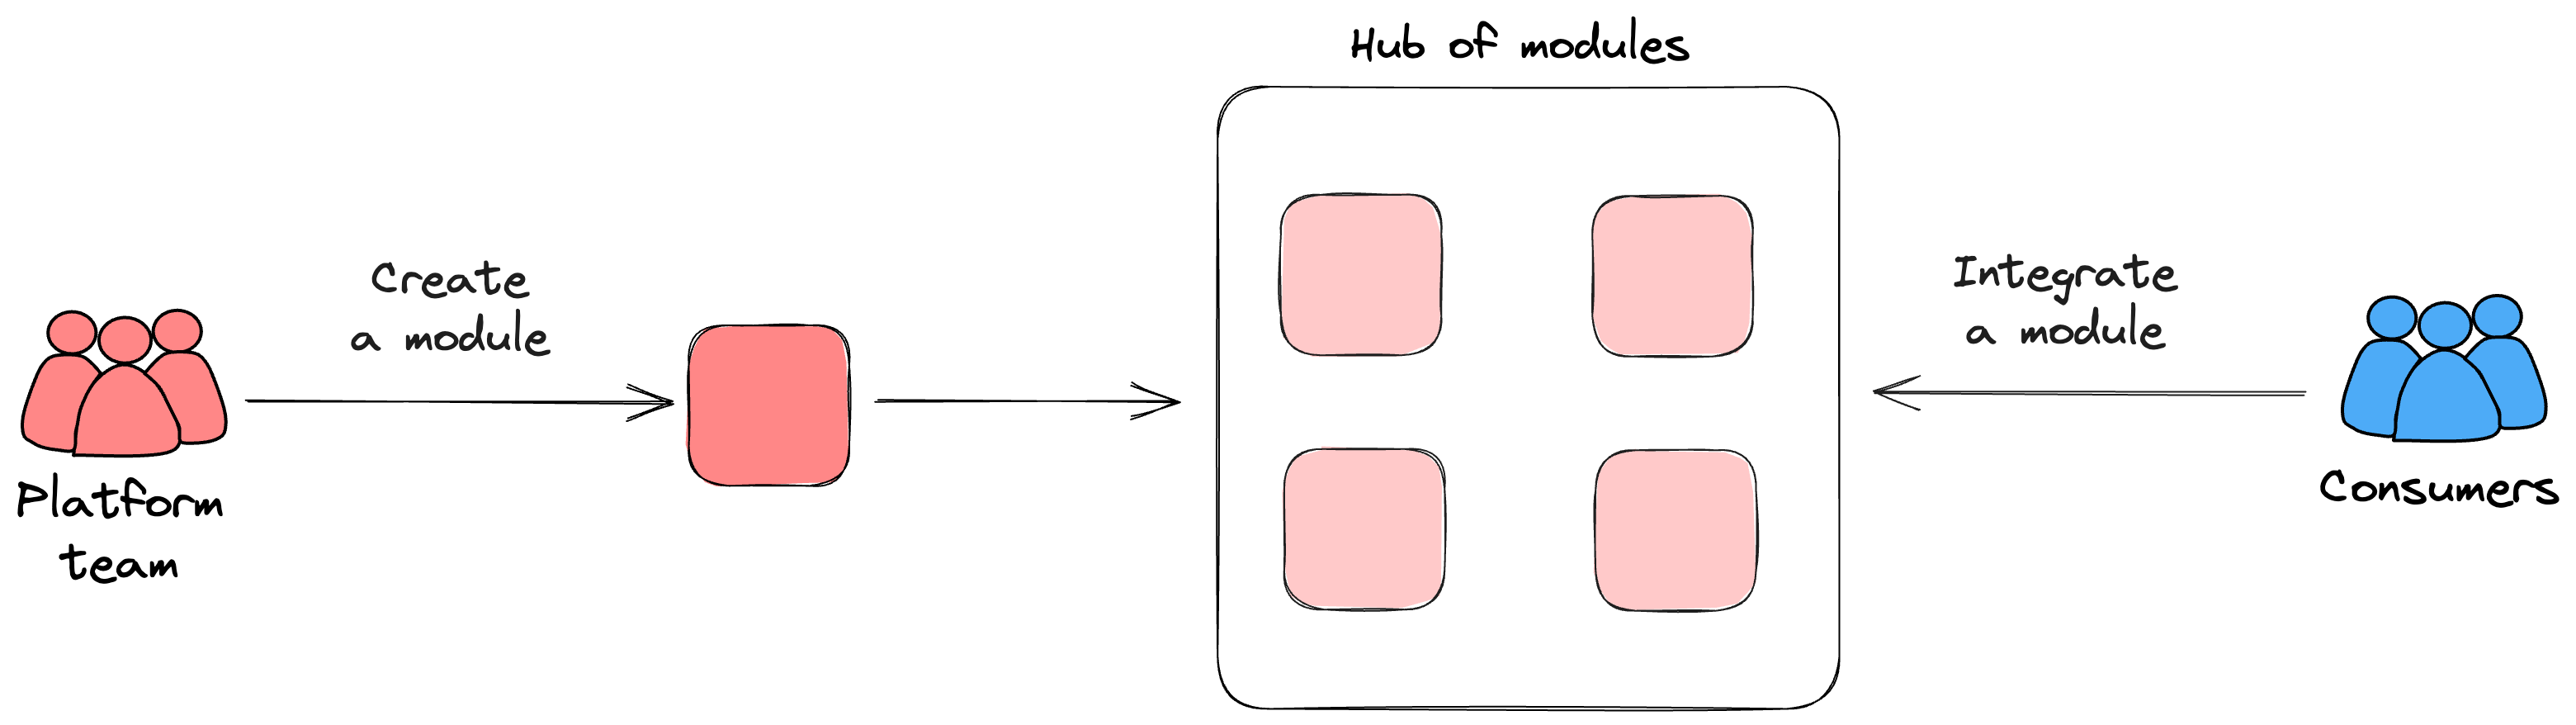 Reusable modules